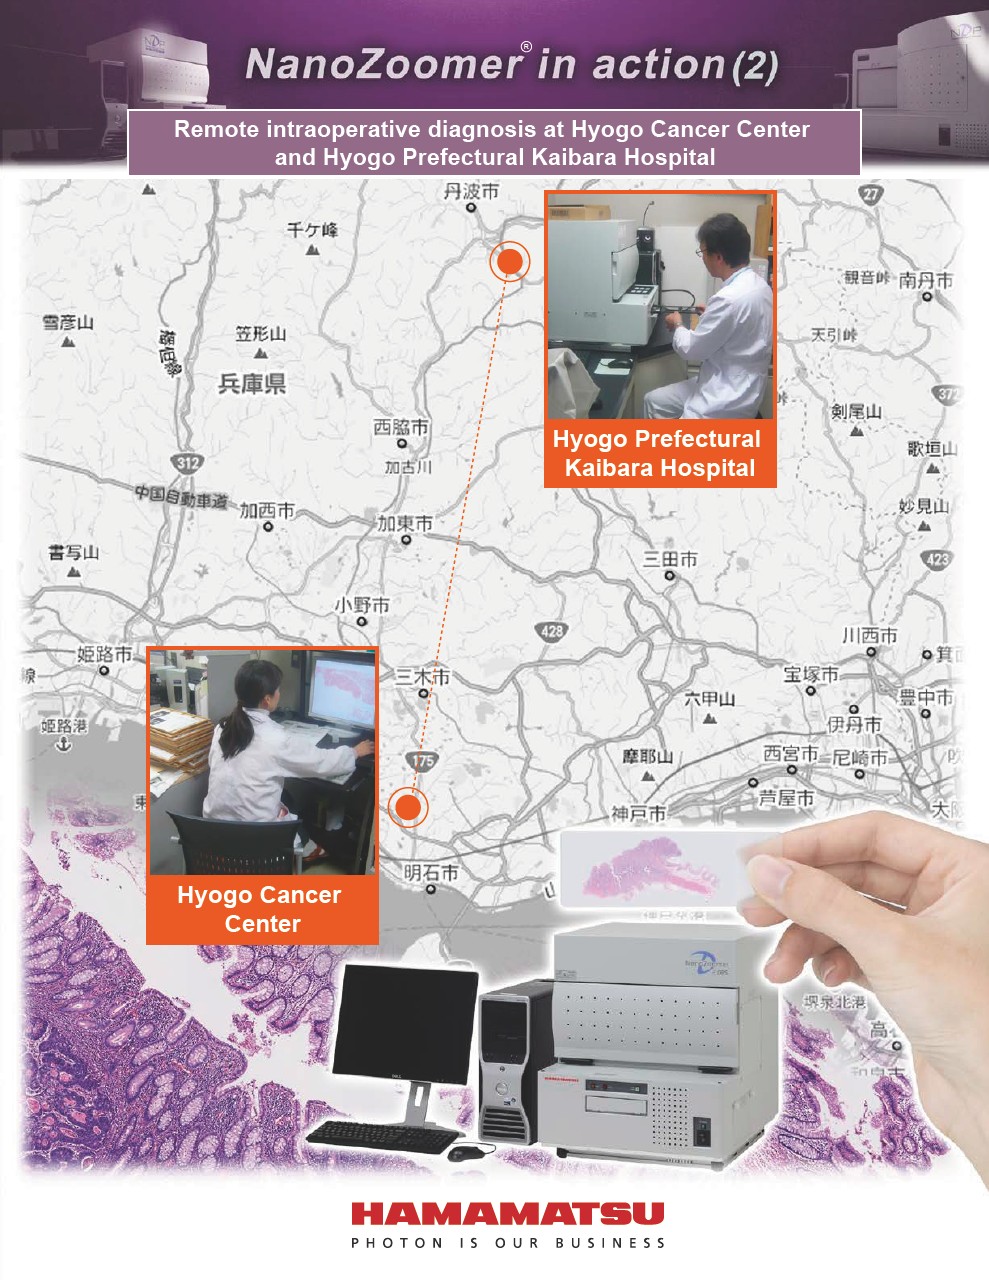 NanoZoomer in action (2) Remote intraoperative diagnosis at Hyogo Cancer Center and Hyogo Prefectural Kaibara Hospital